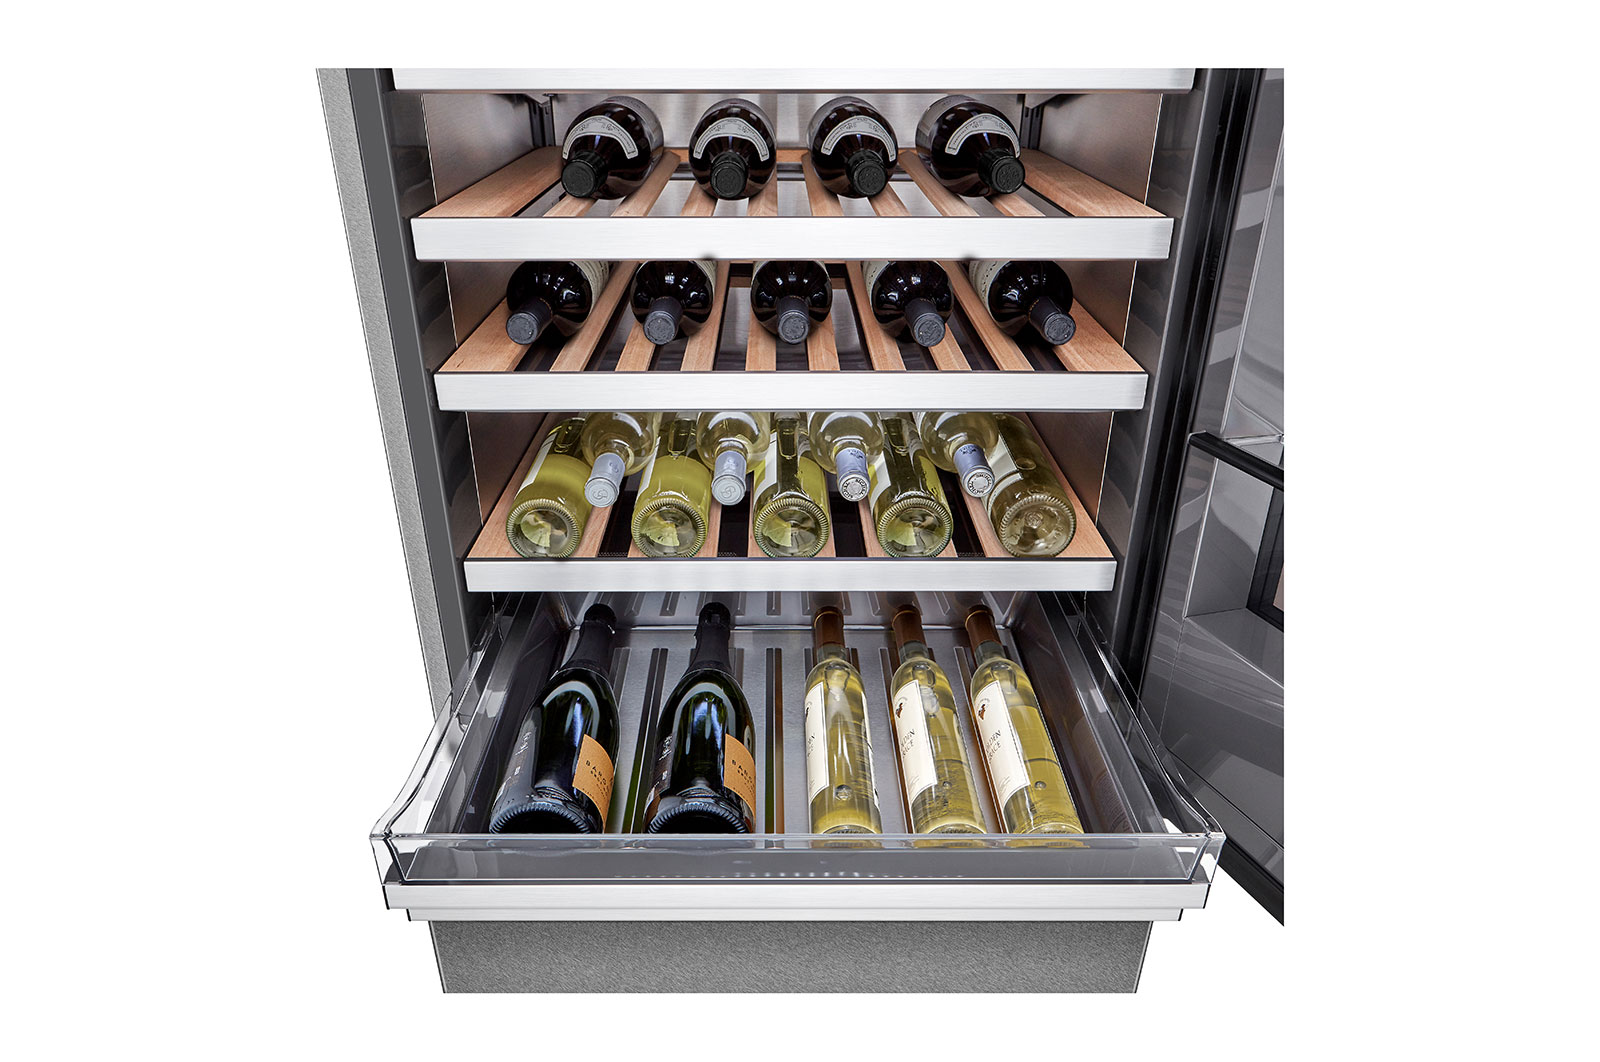 LG SIGNATURE 15 cu. ft. Smart wi-fi Enabled InstaView® Wine Cellar Refrigerator, Wine Shelving System, URETC1408N